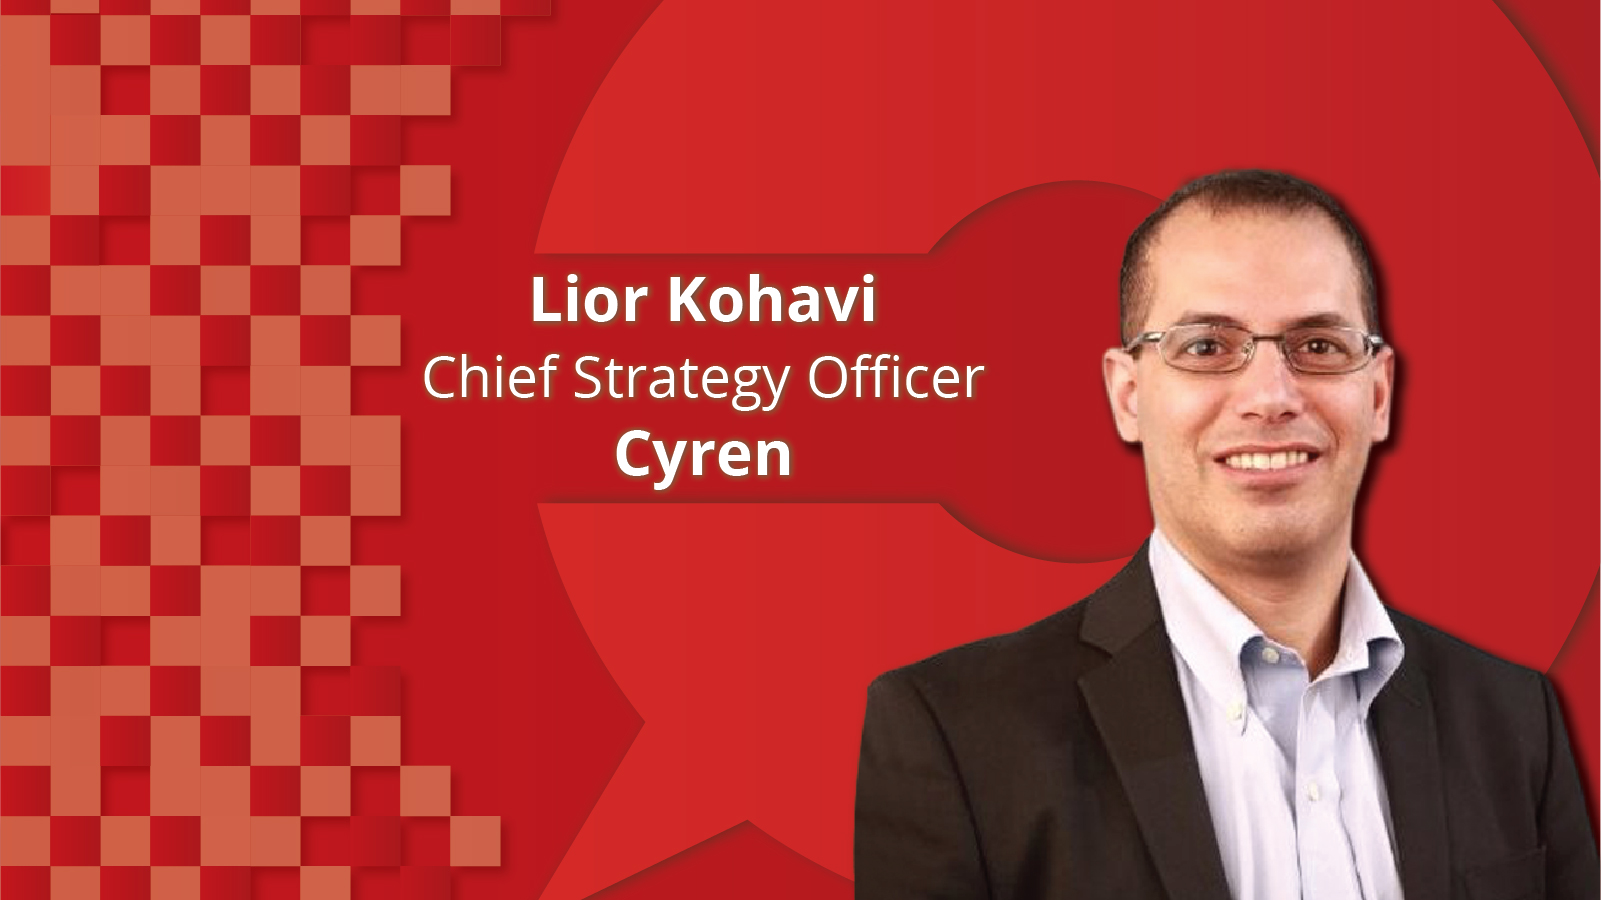 Lior Kohavi, Chief Strategy Officer, Cyren